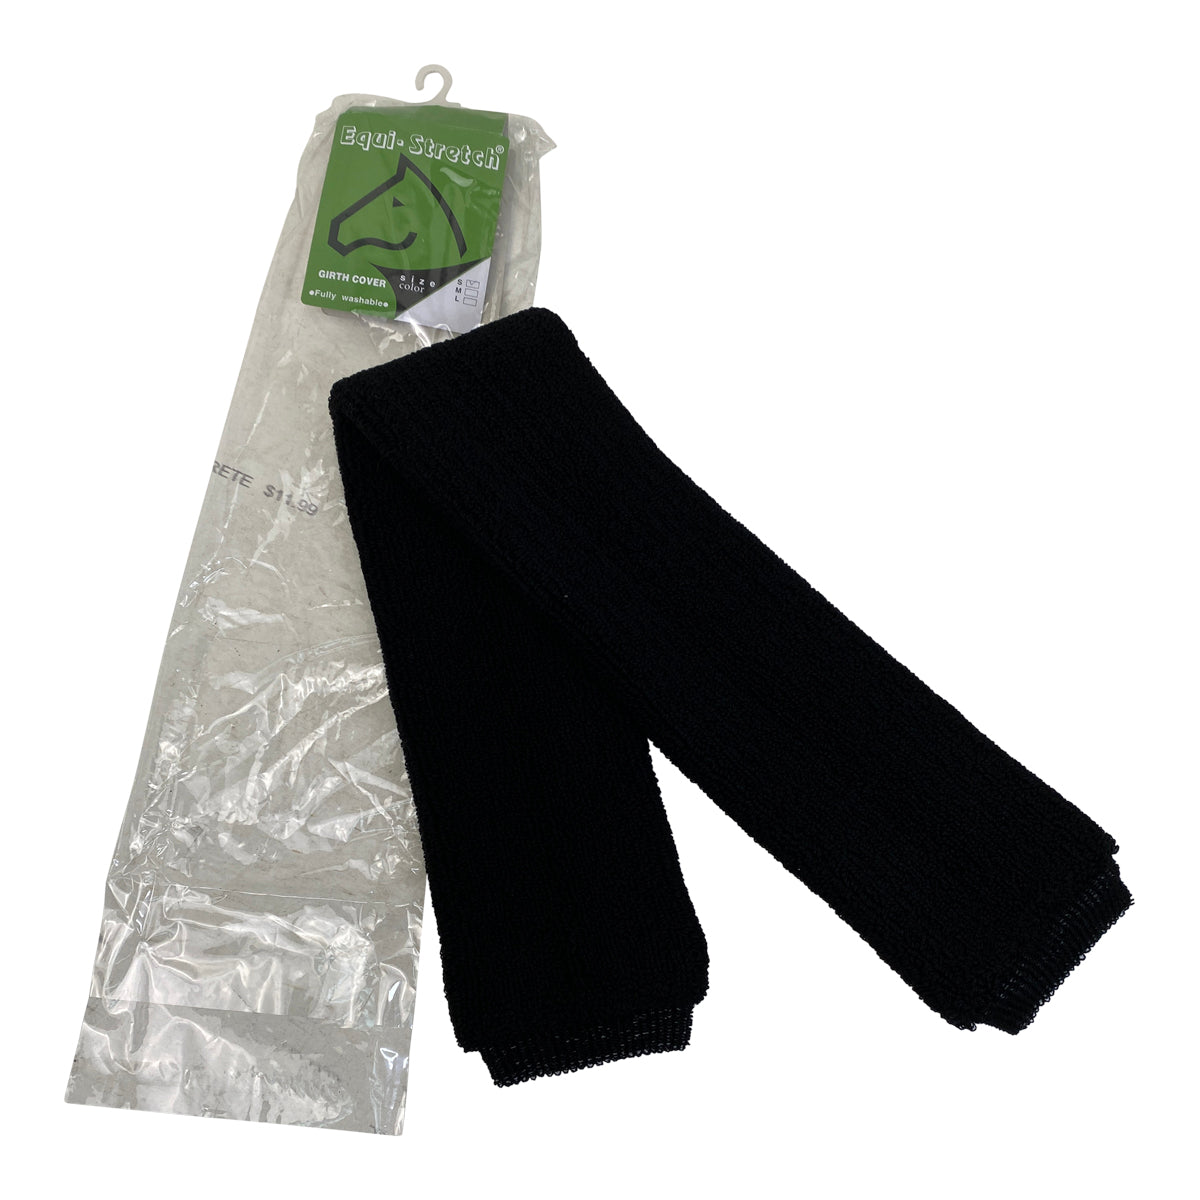 Equi-Stretch Girth Sock in Black